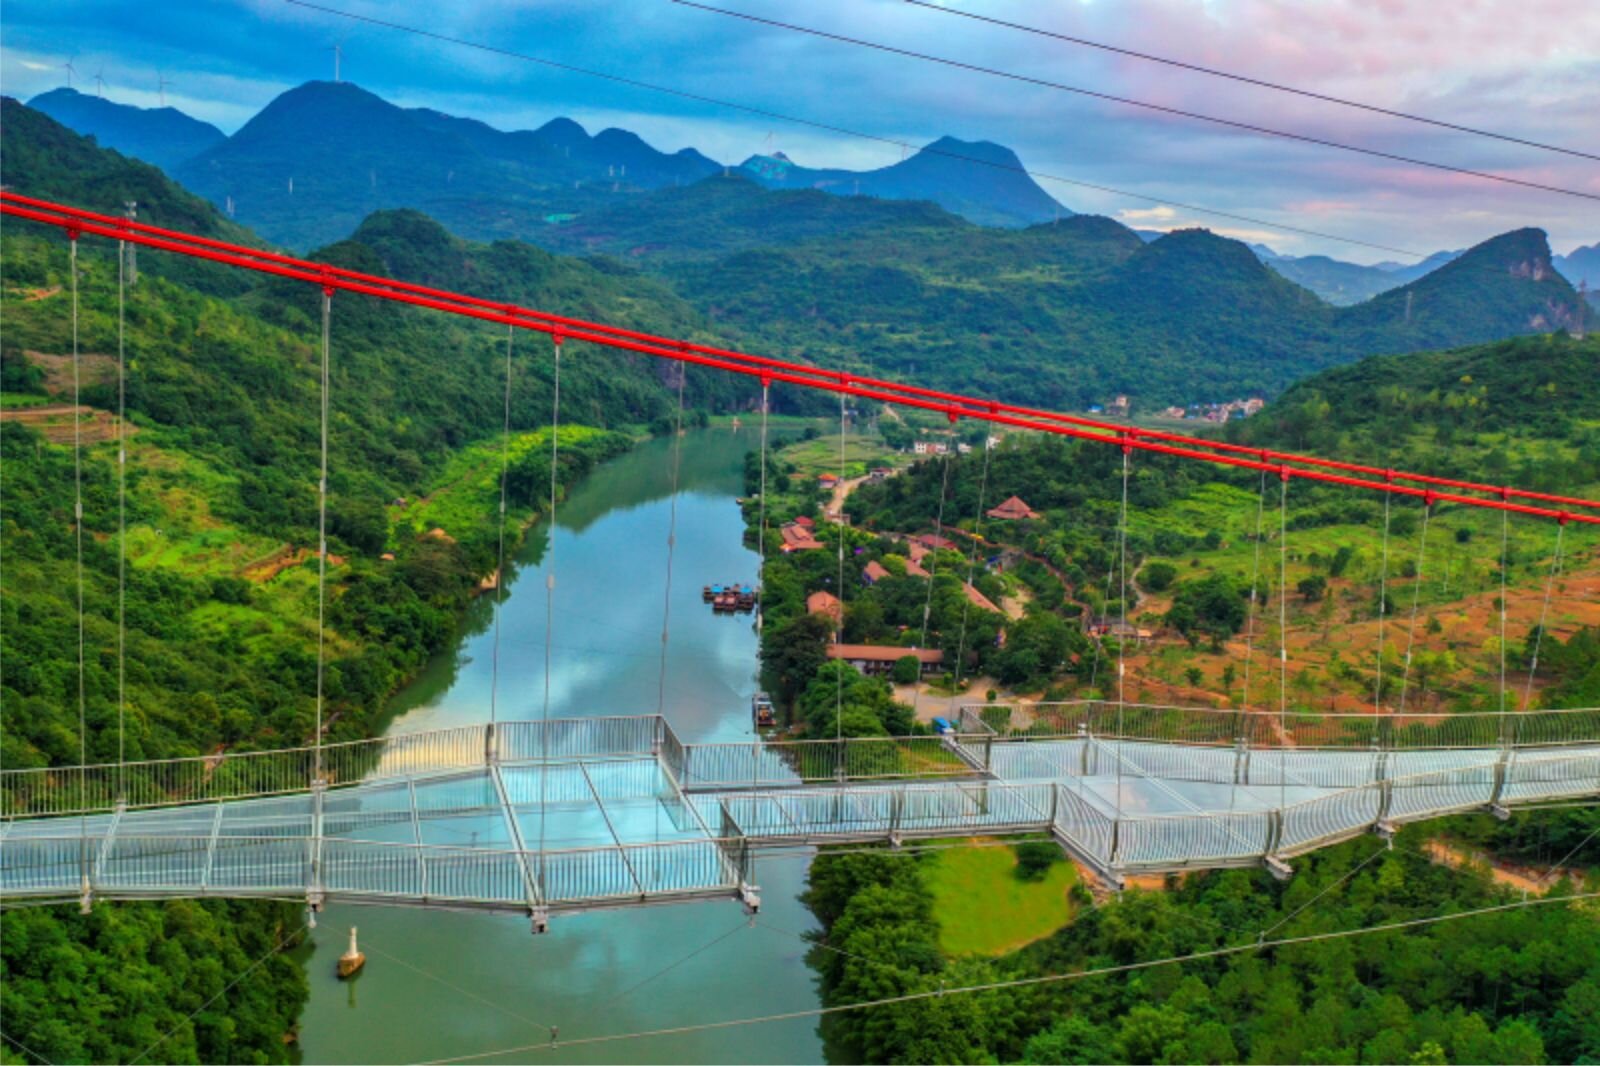 More information about "Κίνα: Η μεγαλύτερη γέφυρα με γυάλινο δάπεδο στον κόσμο μήκους 526 μέτρων"